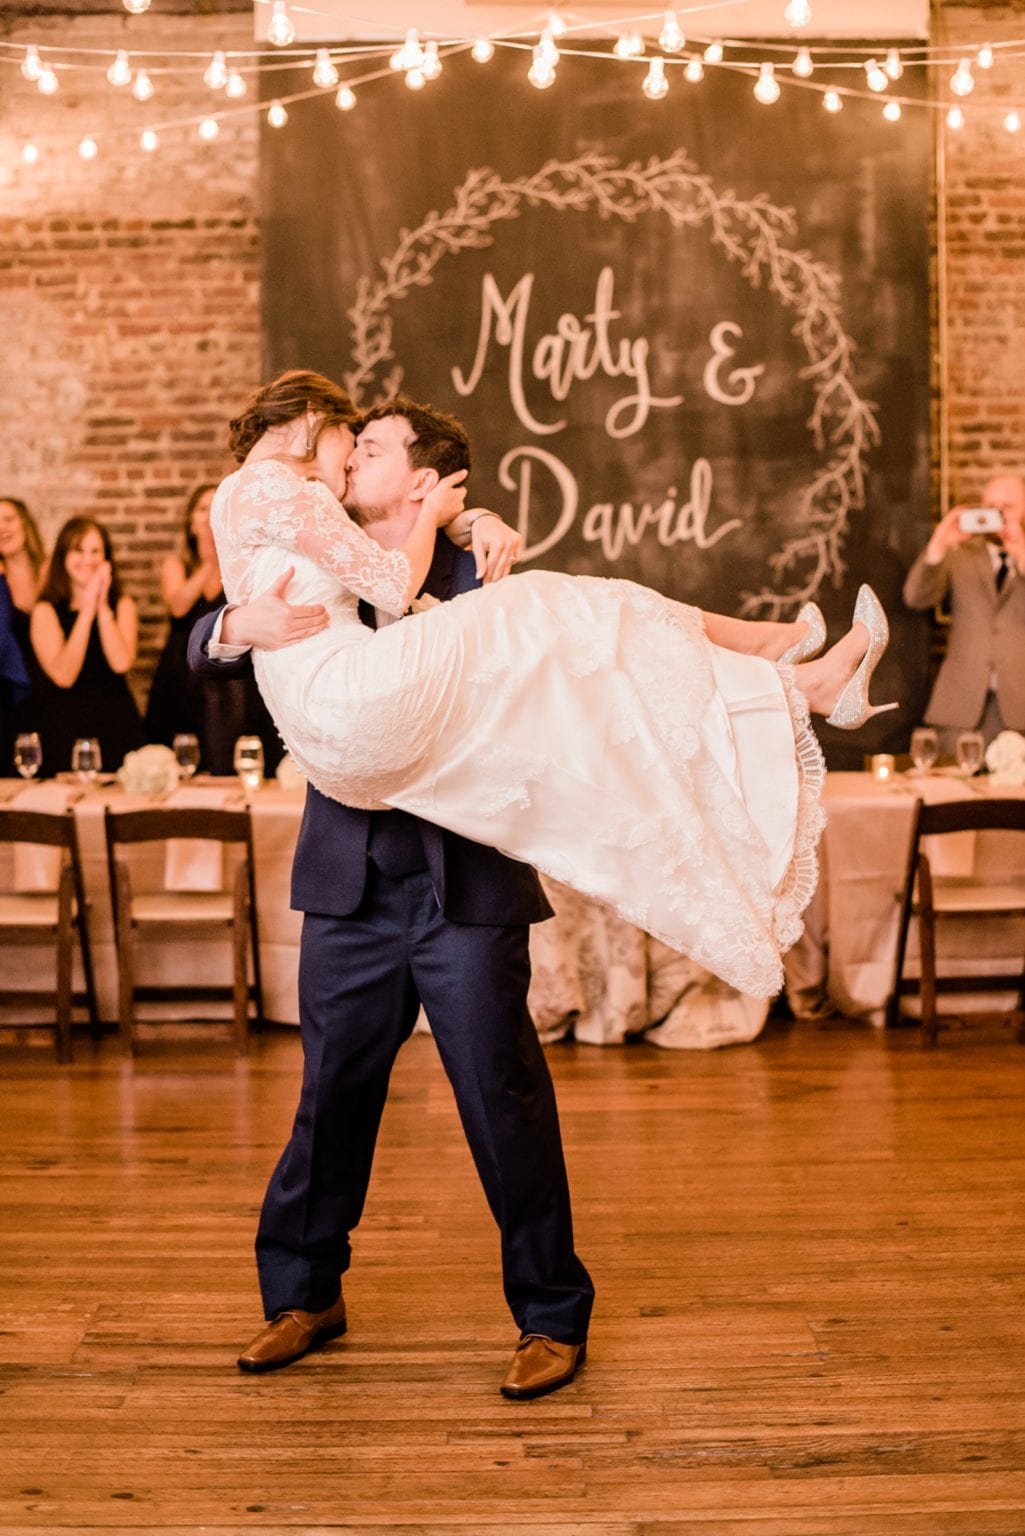 Marty & David • Downtown Raleigh Wedding Photographers